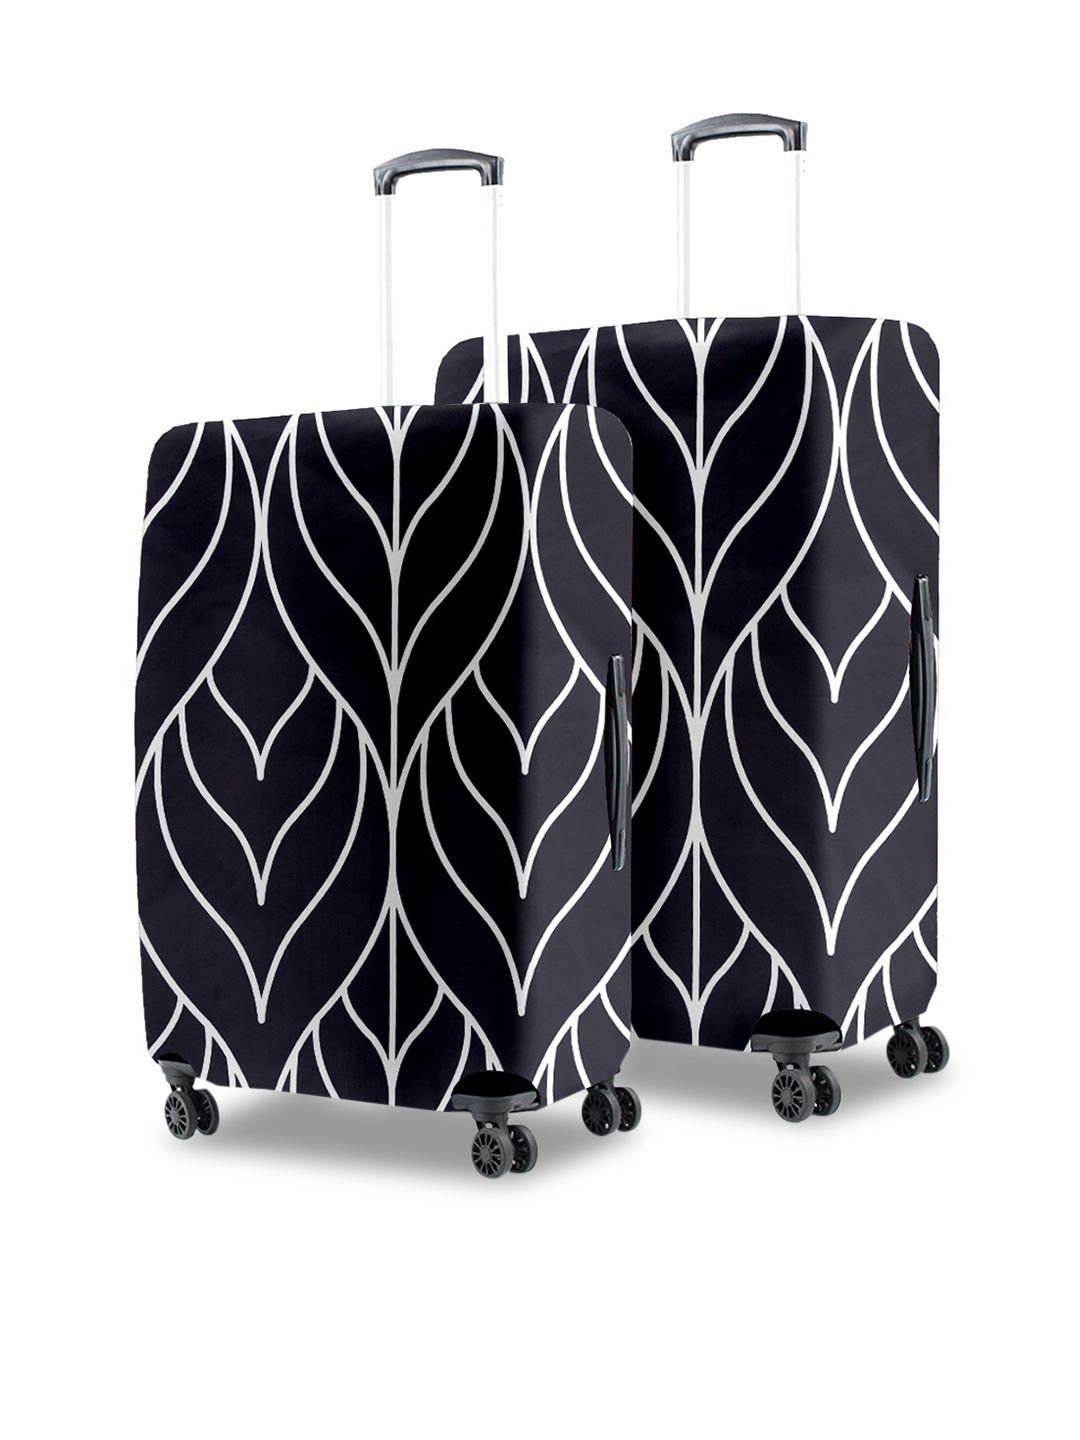 cortina black printed set of 2 trolley bag cover